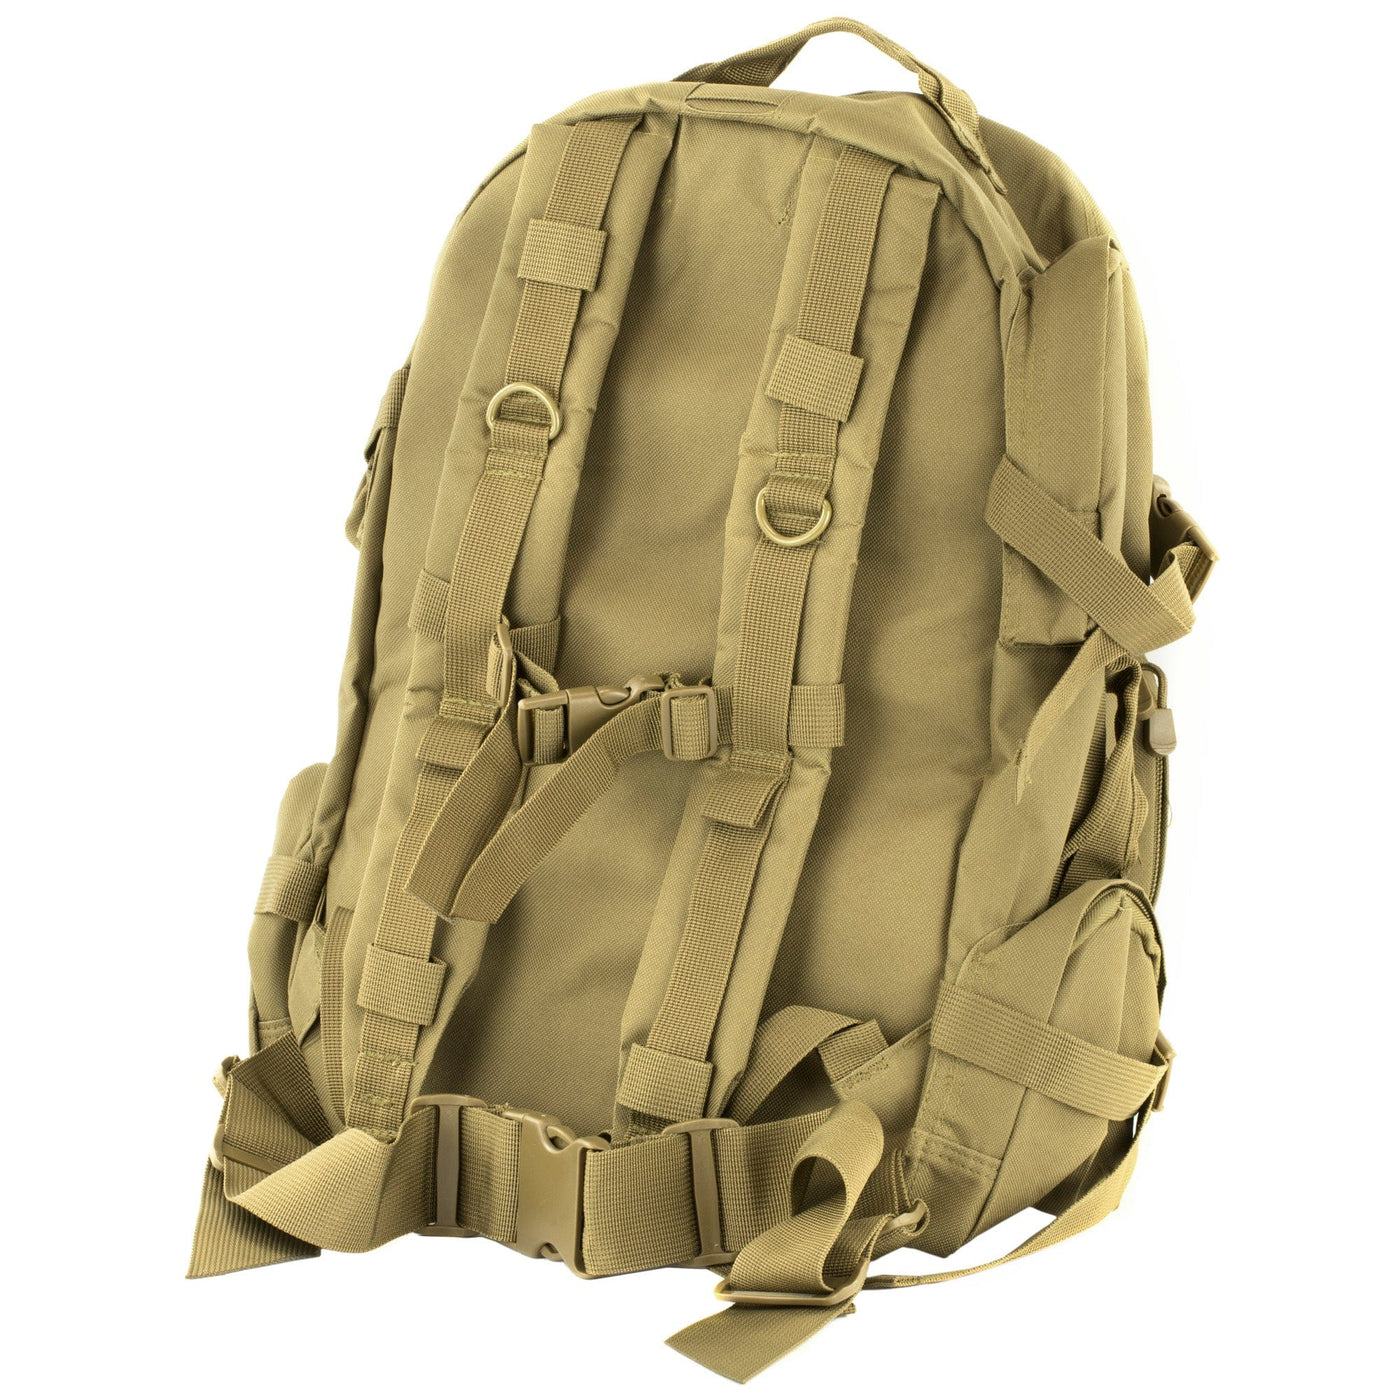 NCSTAR Ncstar Vism Tactical Backpack Tan Soft Gun Cases